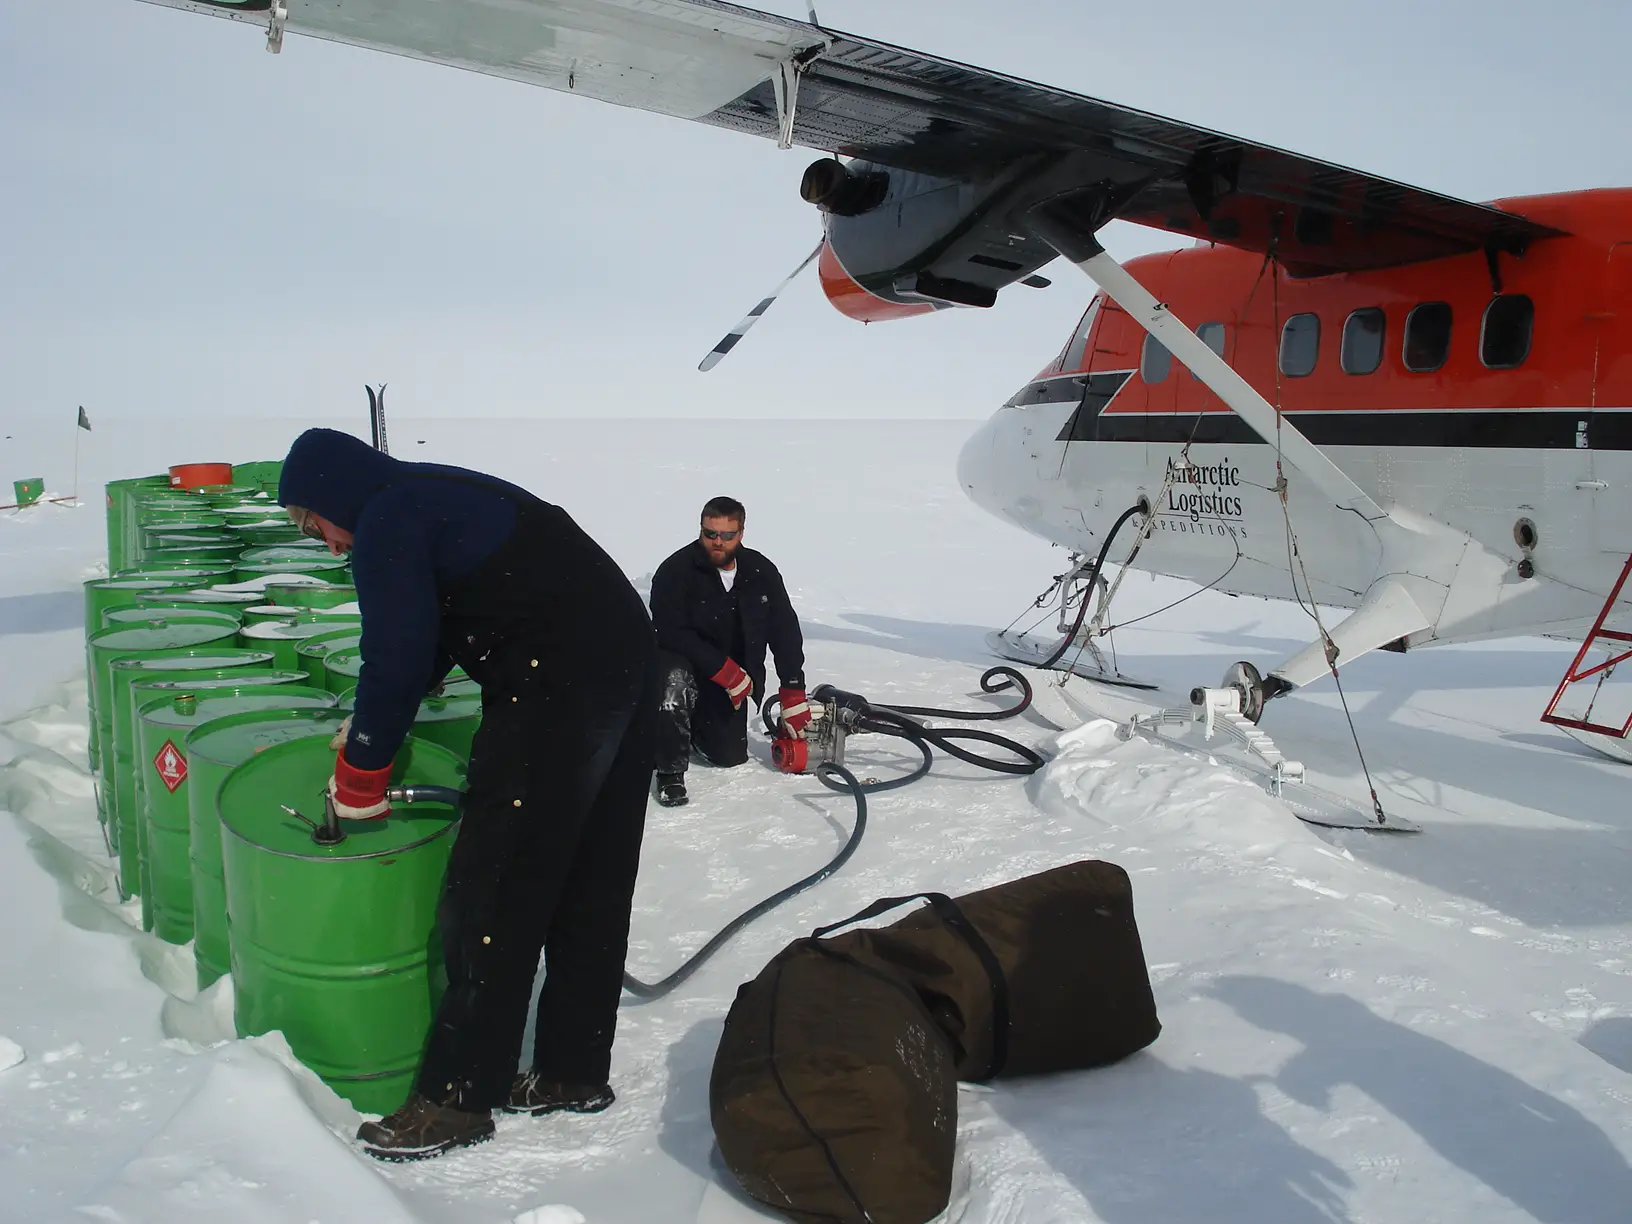 Kenn Borek Air Ceases Operations in the Arctic